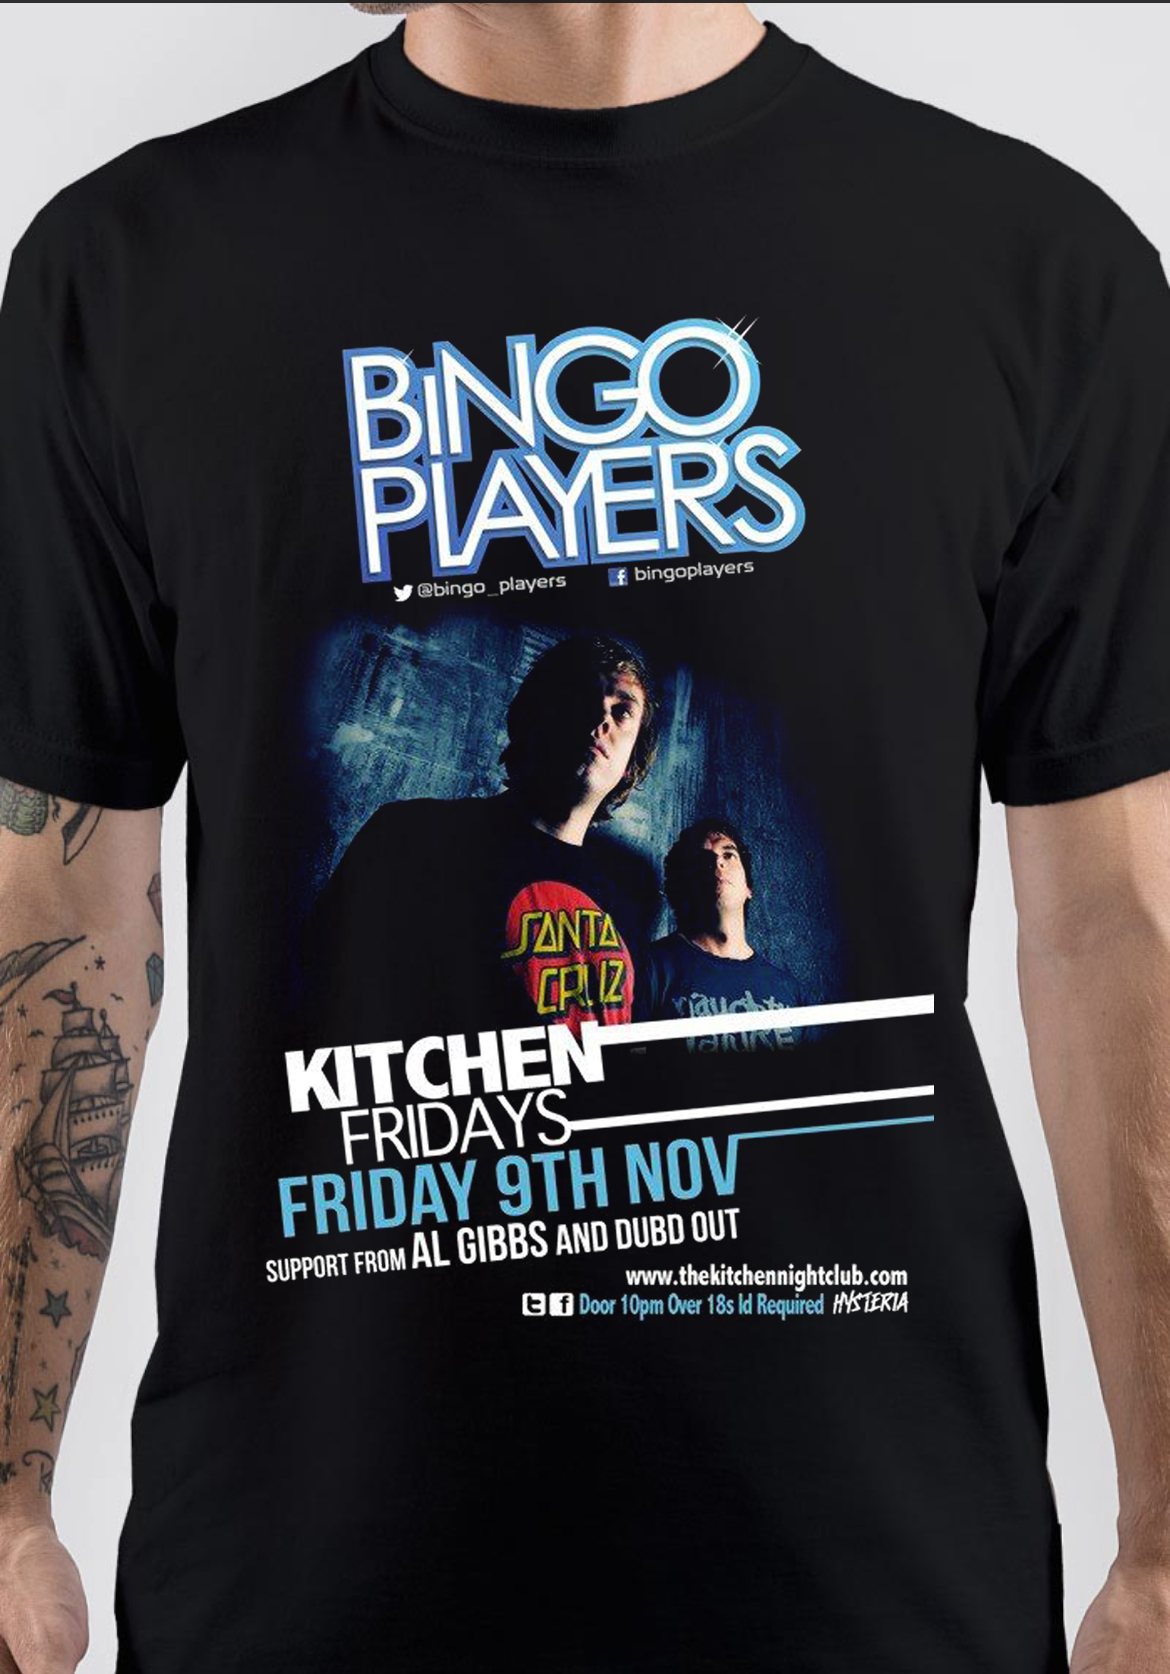 Bingo Players T-Shirt And Merchandise